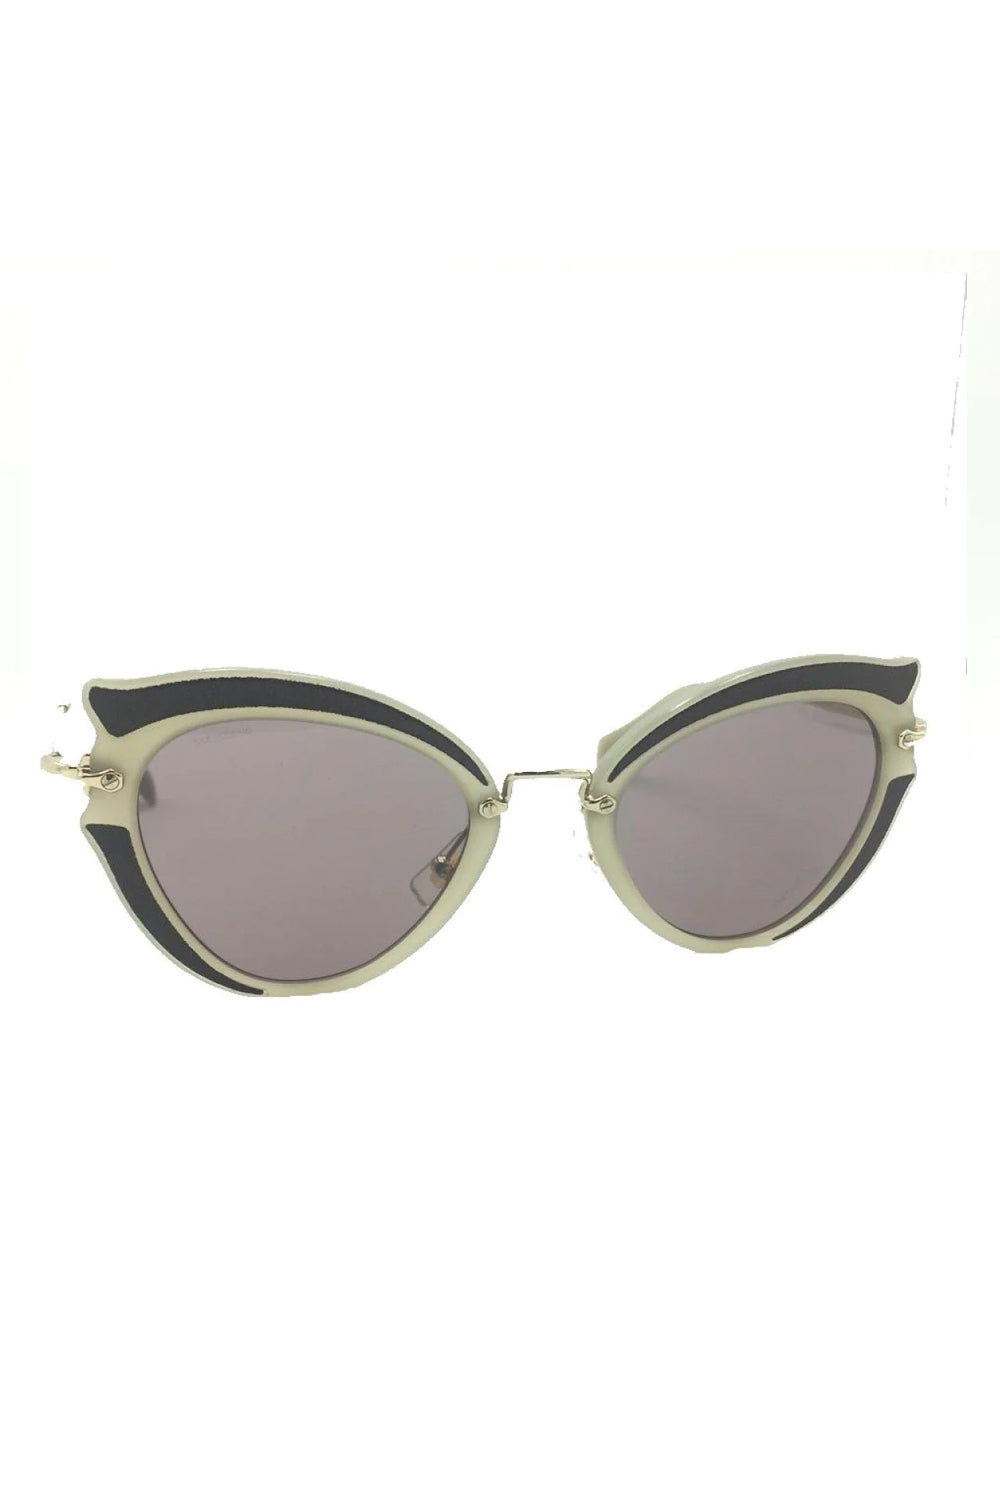 Miu Miu Prada Classic Women's Cat Eye Sunglasses